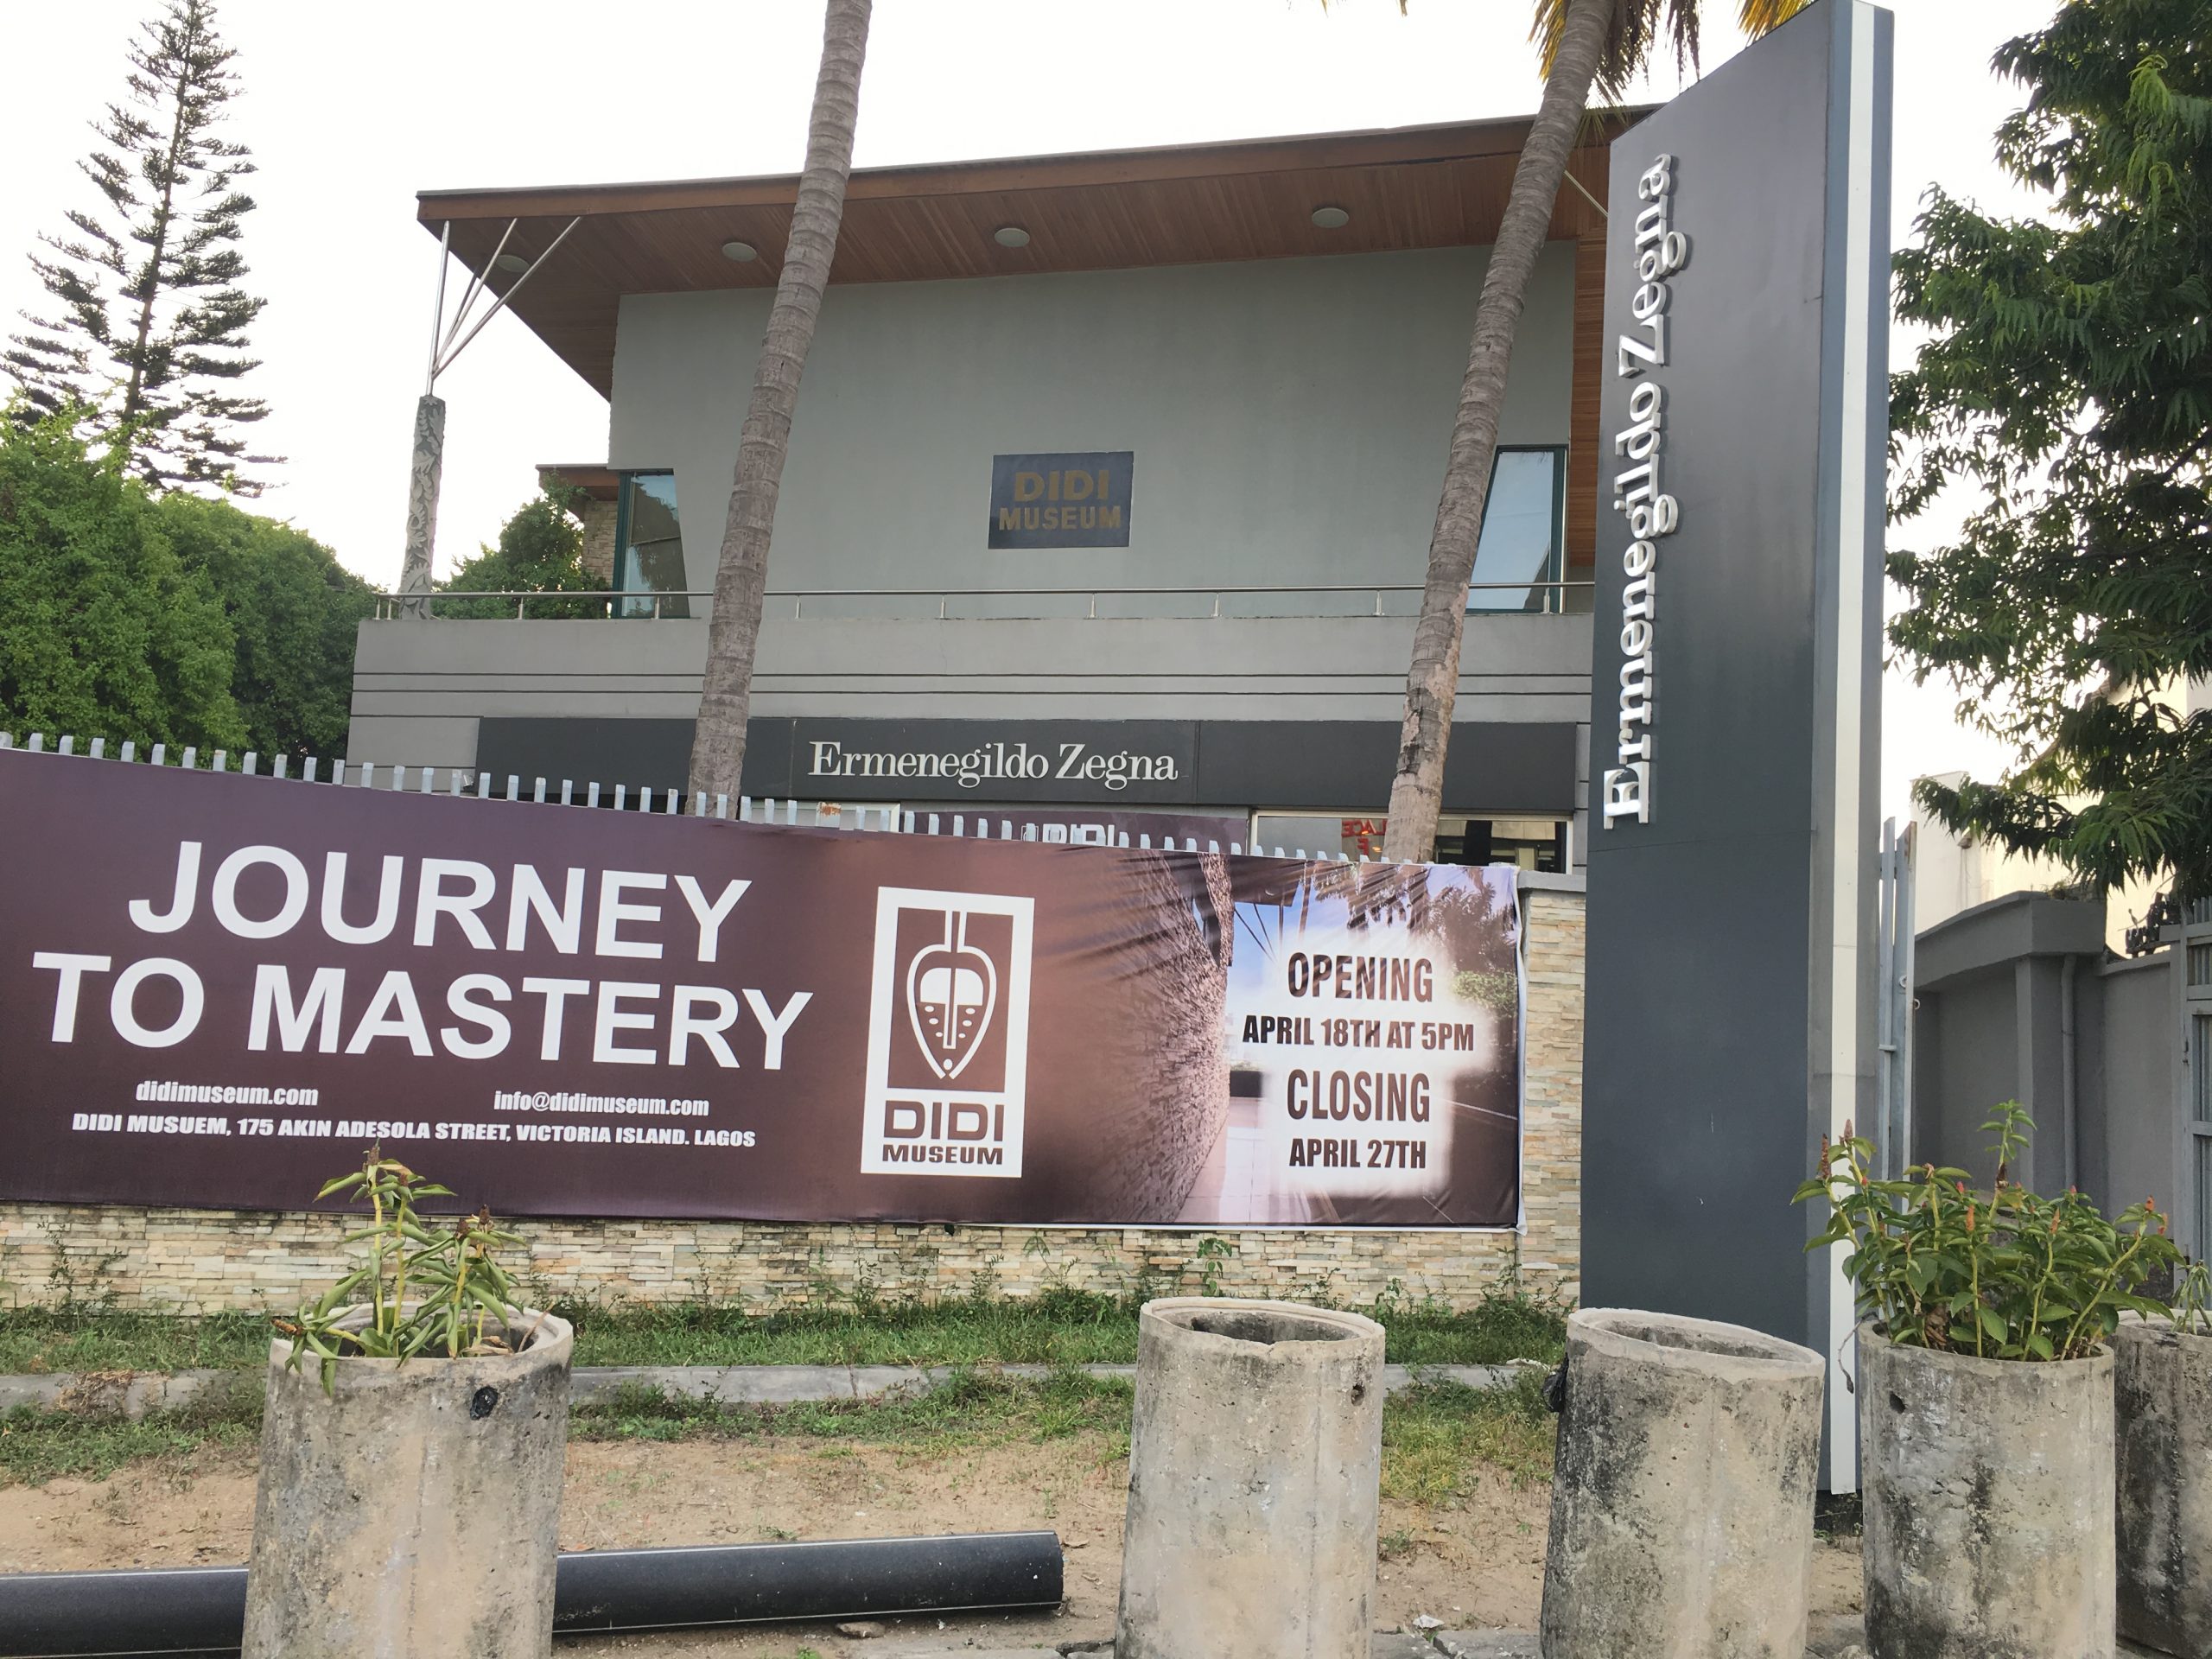 Didi Museum: Journey to Mastery Exhibition